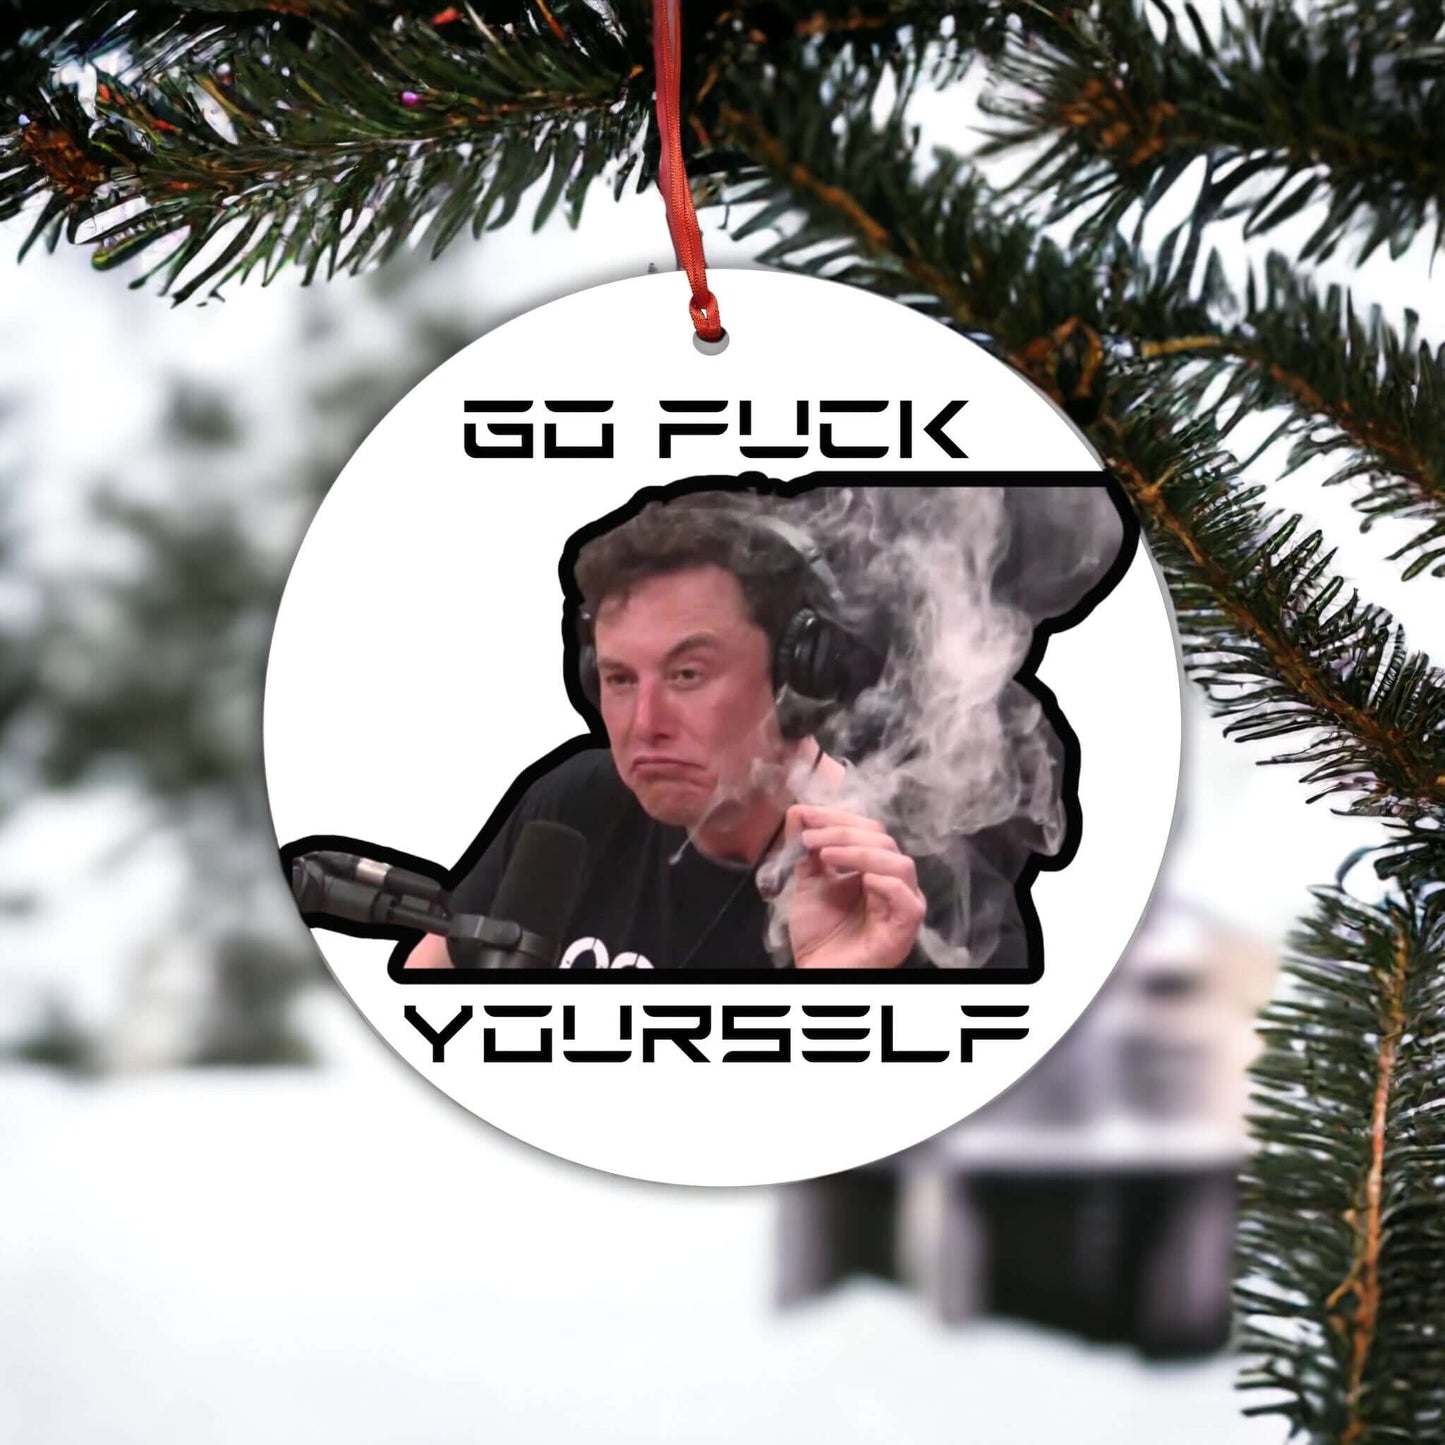 Funny Elon Musk Christmas Ornament